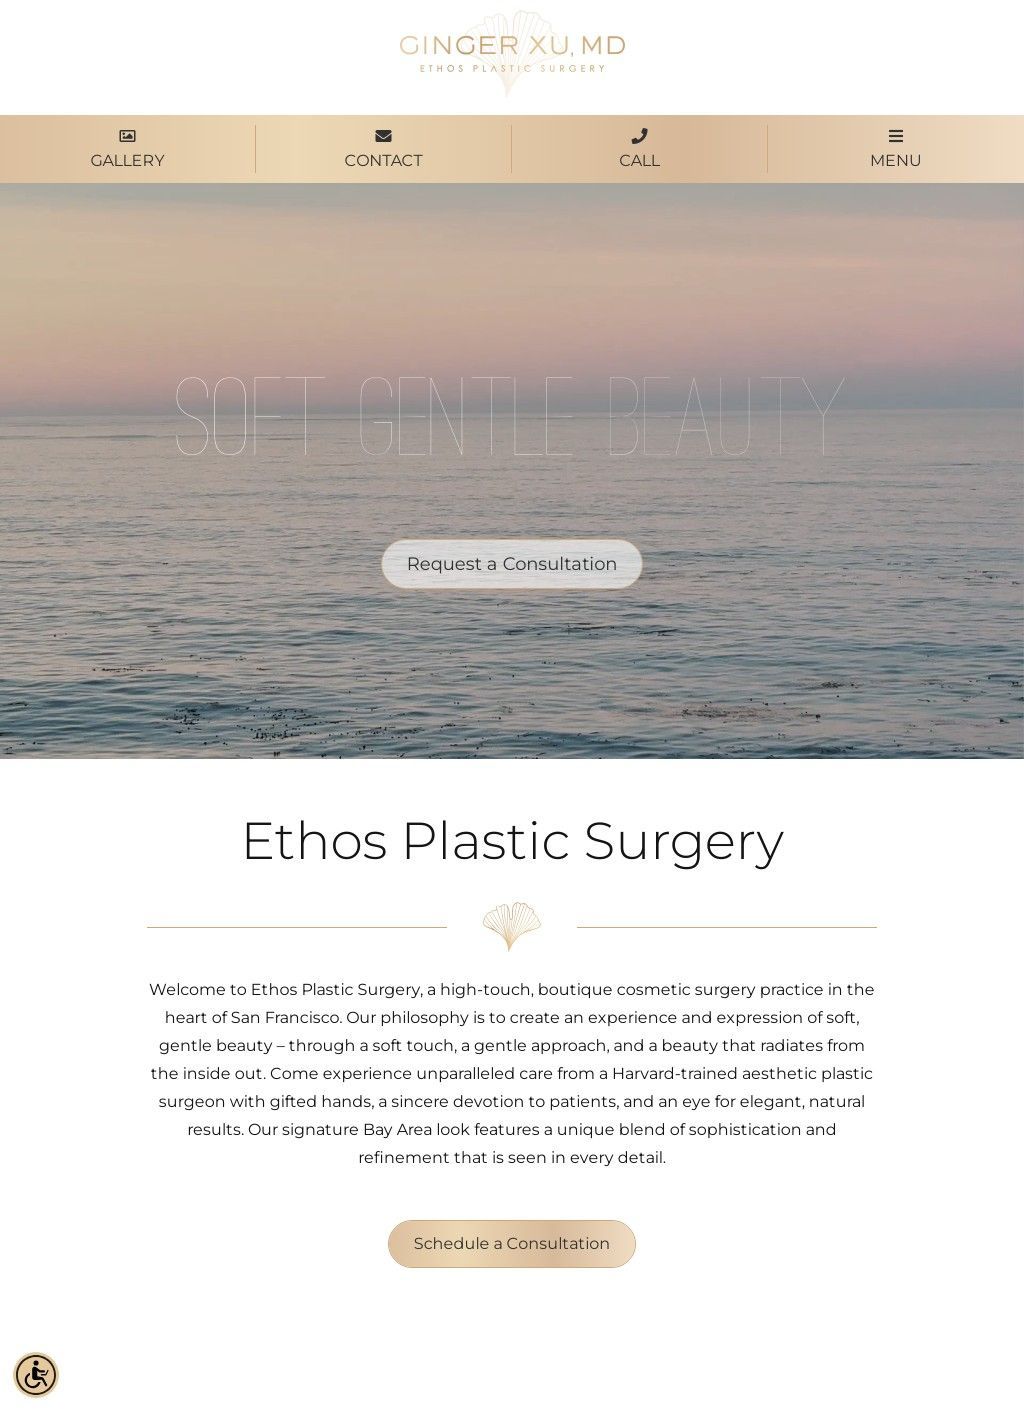 Ethos Plastic Surgery: Ginger Xu, M.D.